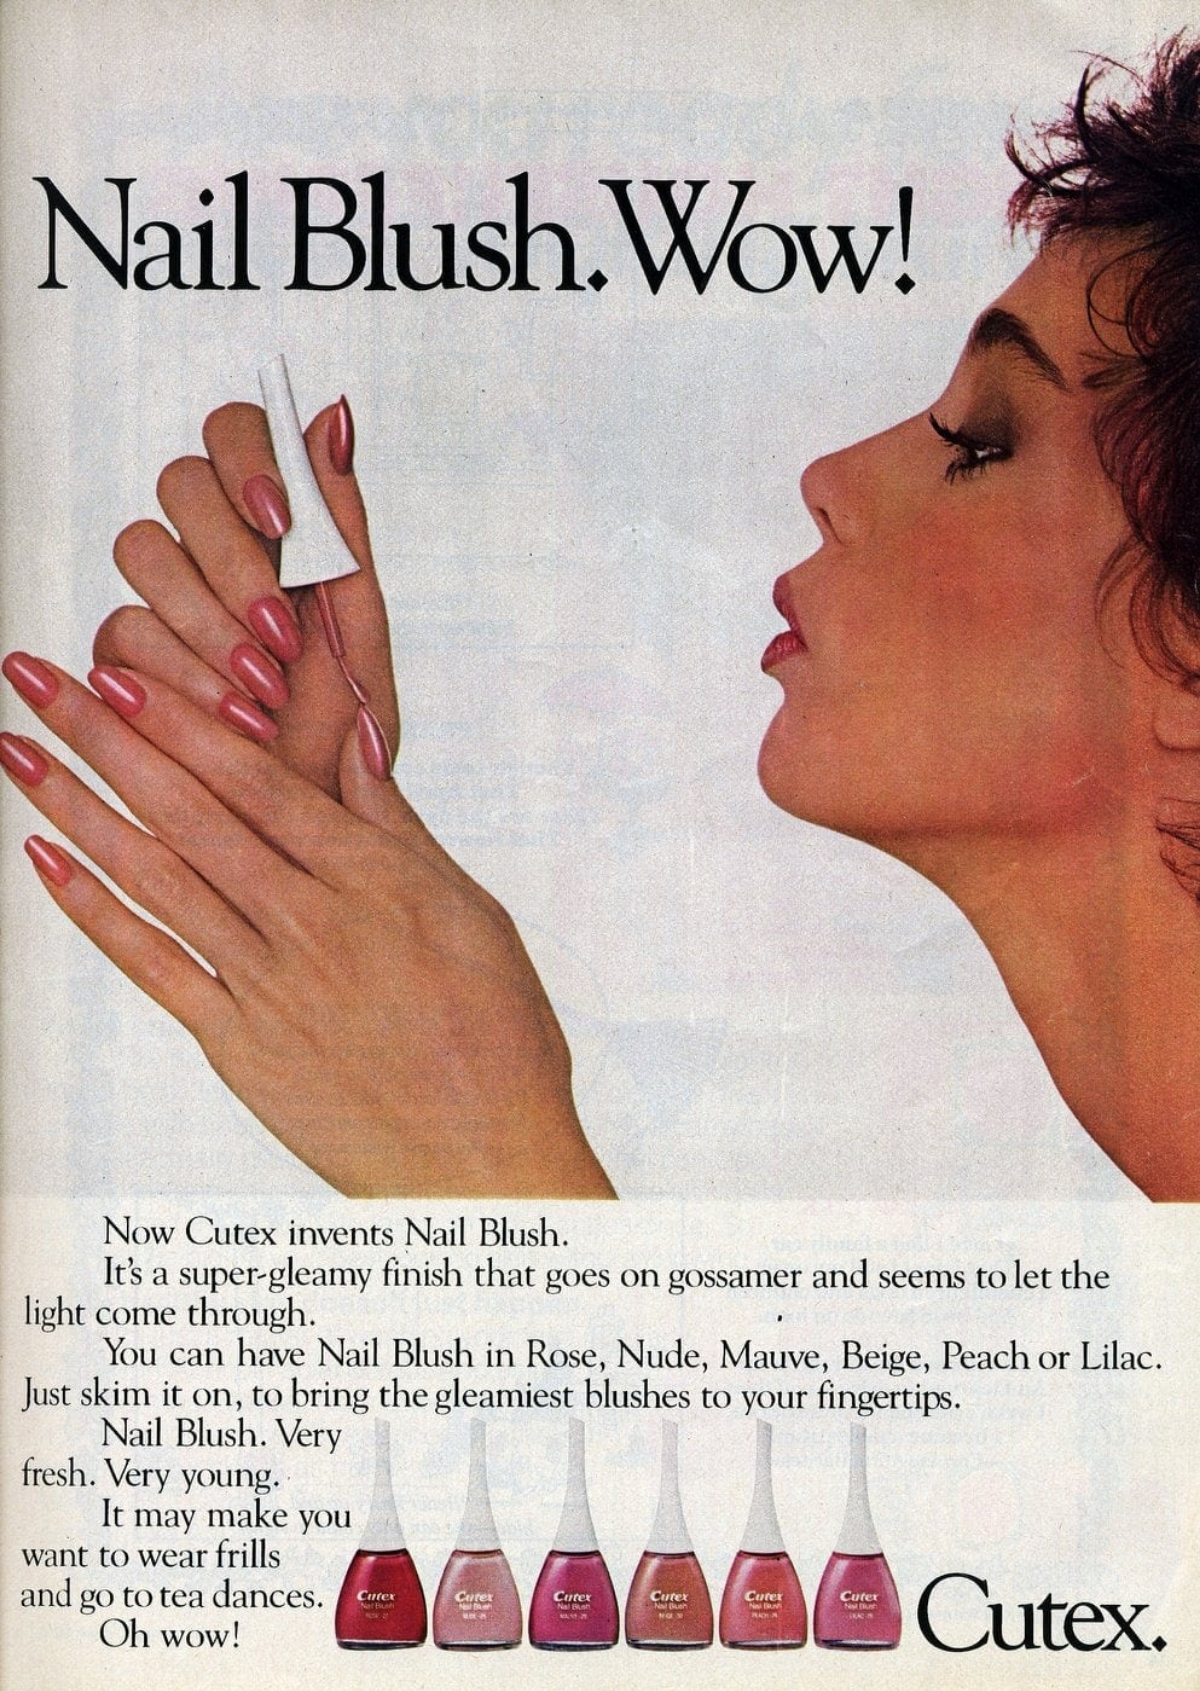 May anyone find a dupe for this nail polish ? : r/Nails